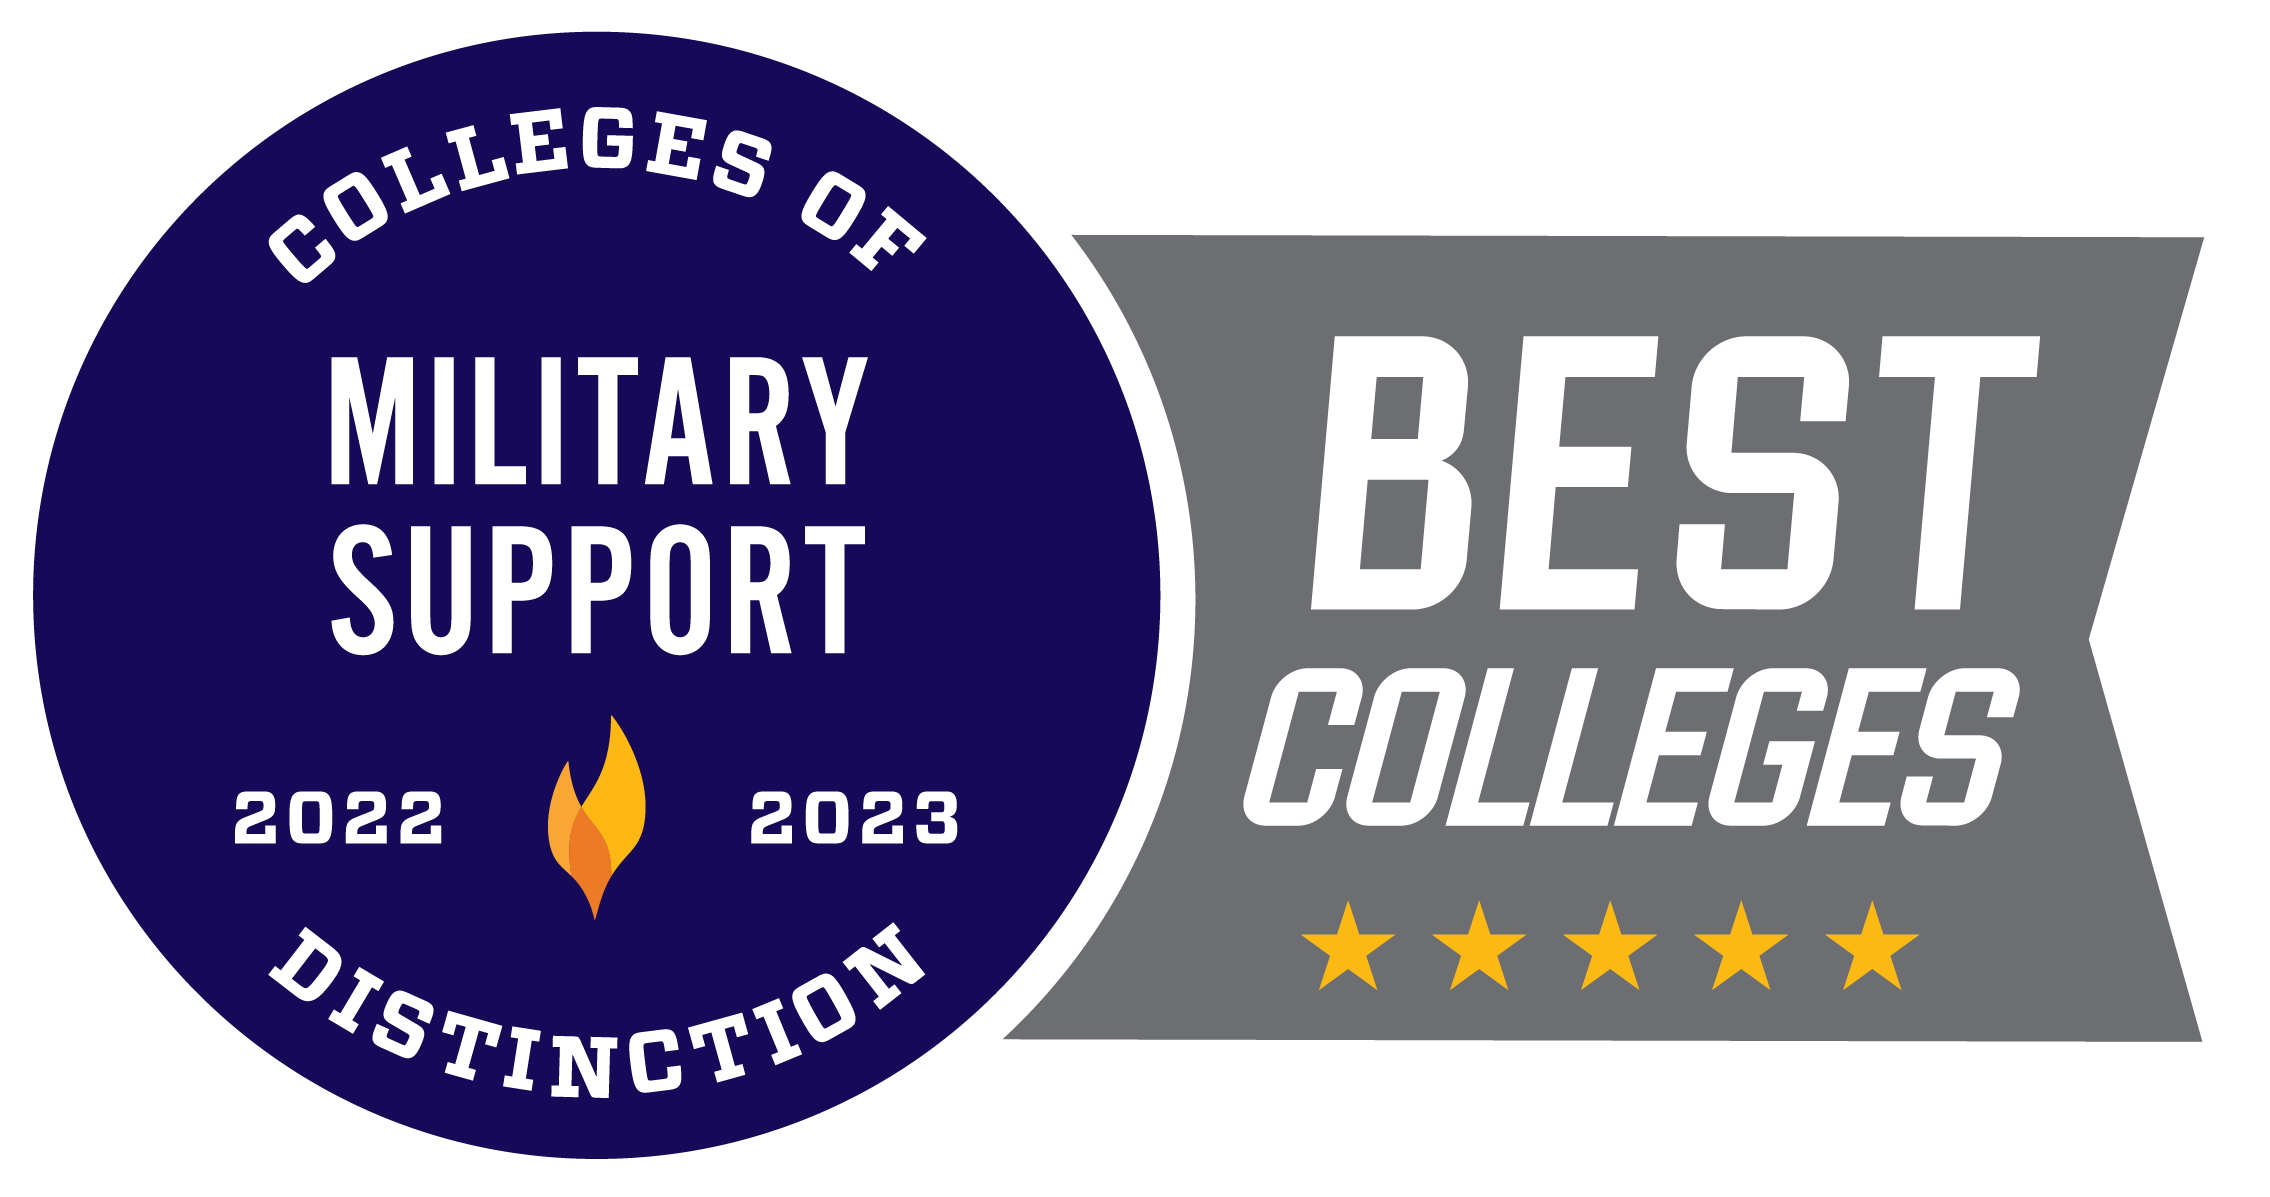 Military college of distinction badge